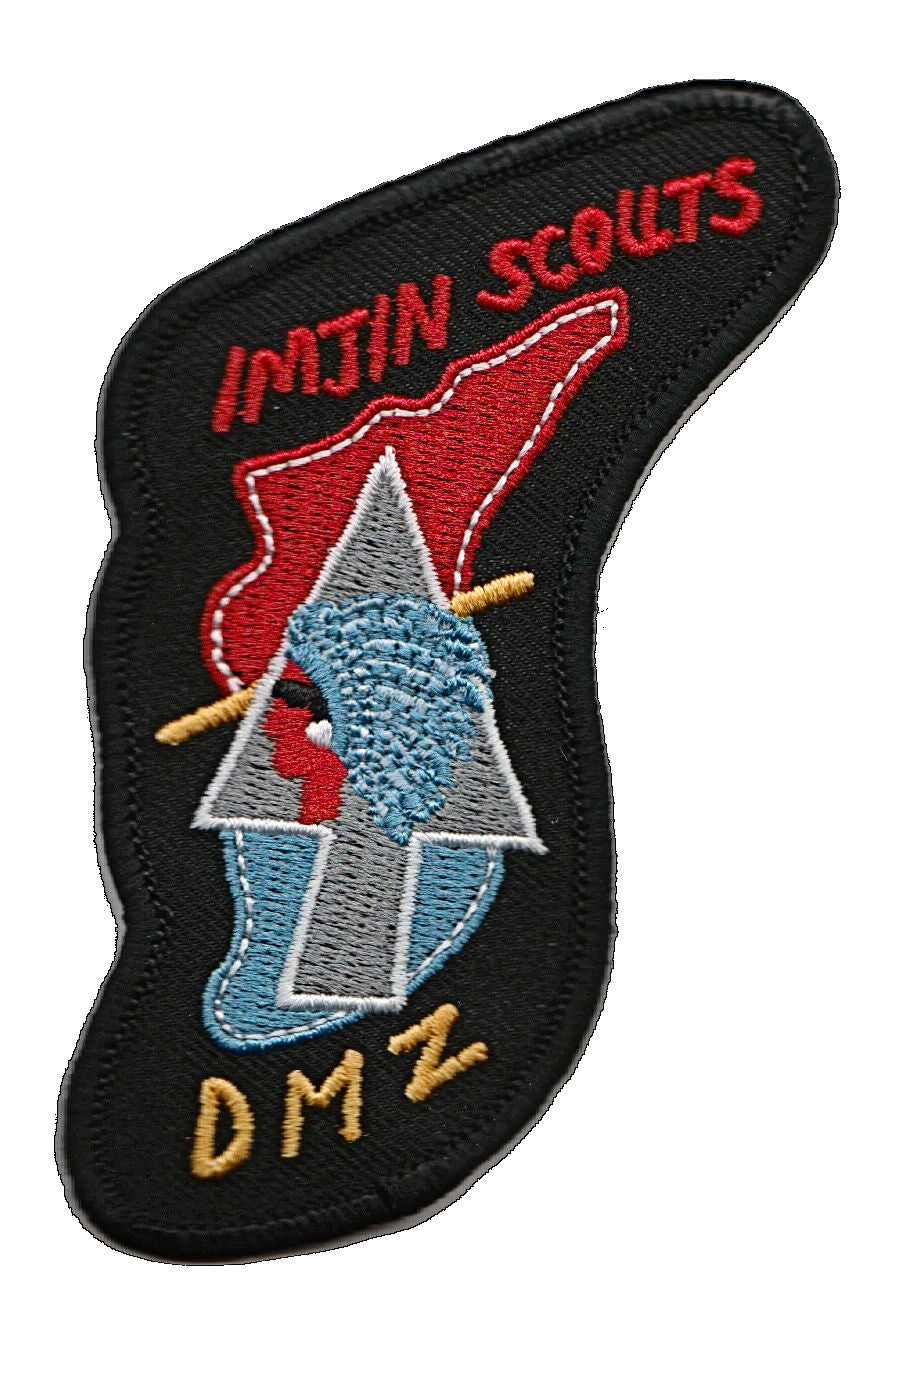 Imjin Scouts DMZ USMC Patch